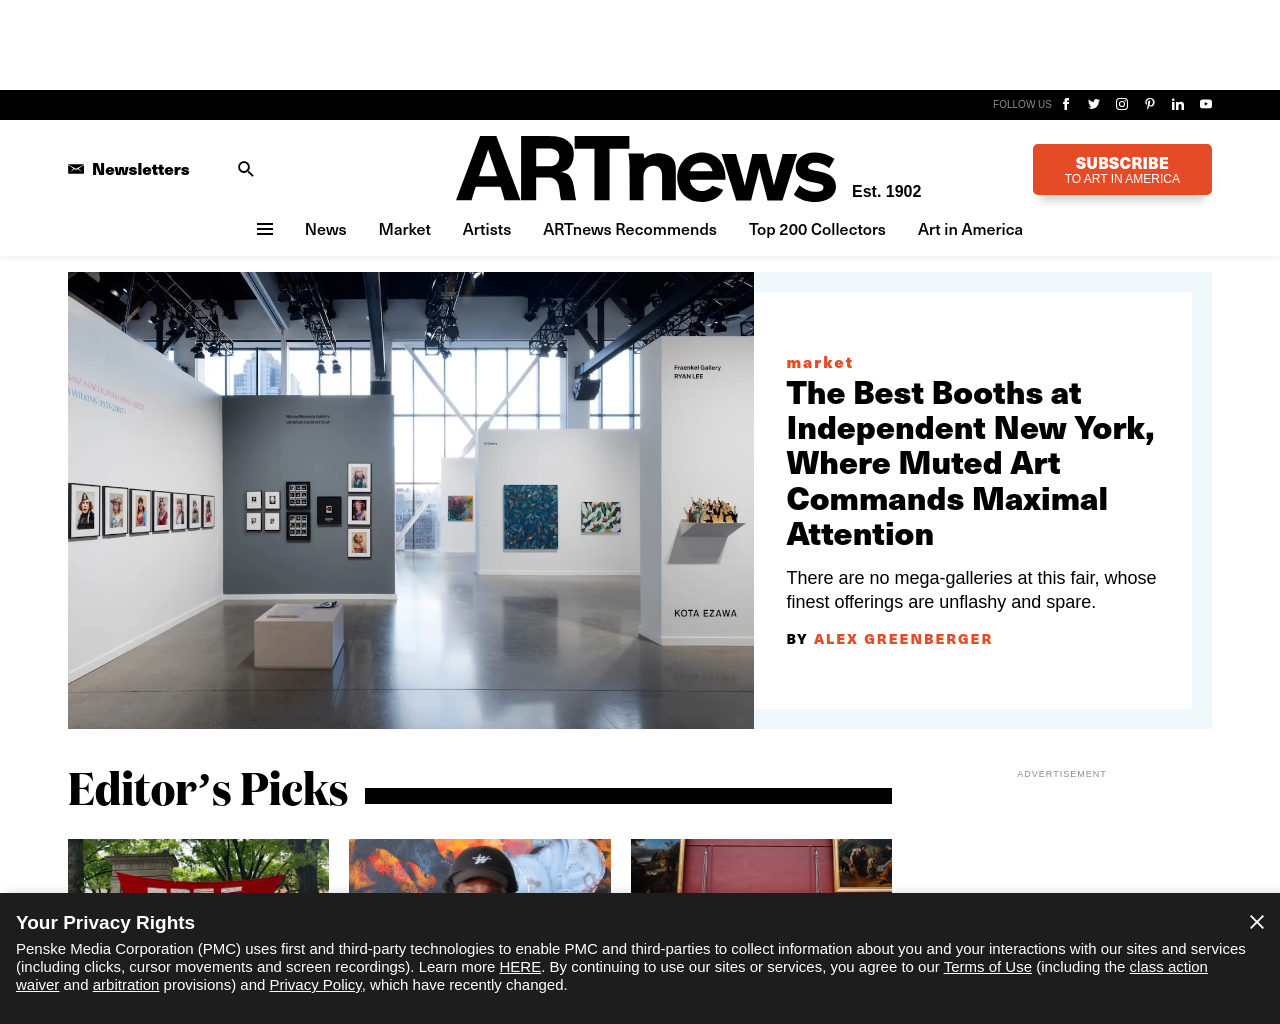 artnews.com